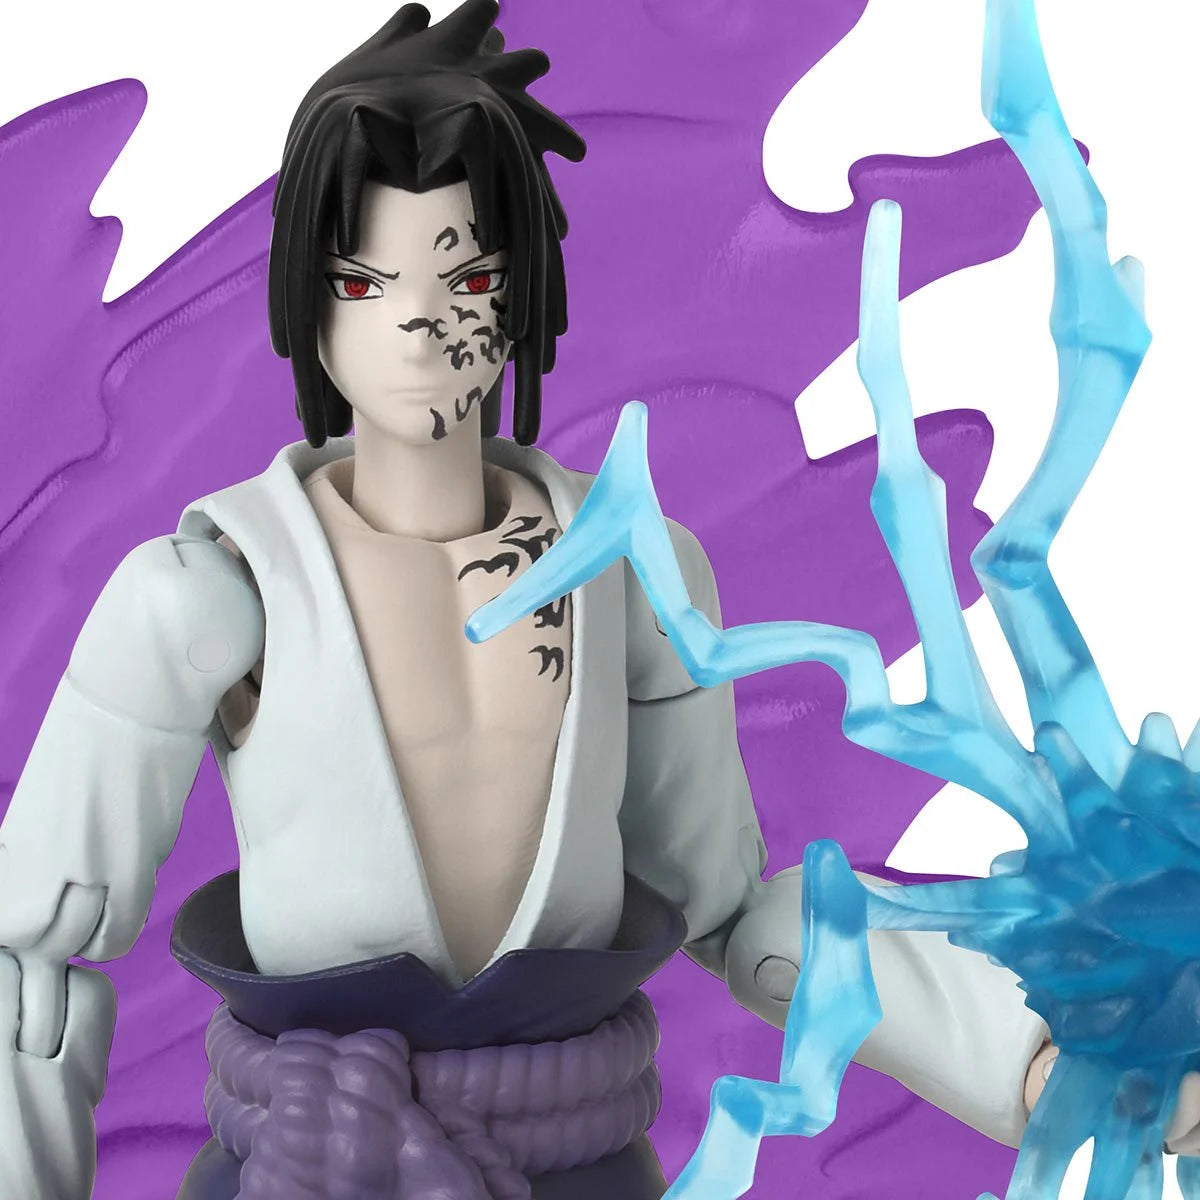 Naruto Shippuden - Anime Heroes Beyond Sasuke Uchiha Curse Mark Transformation Action Figure